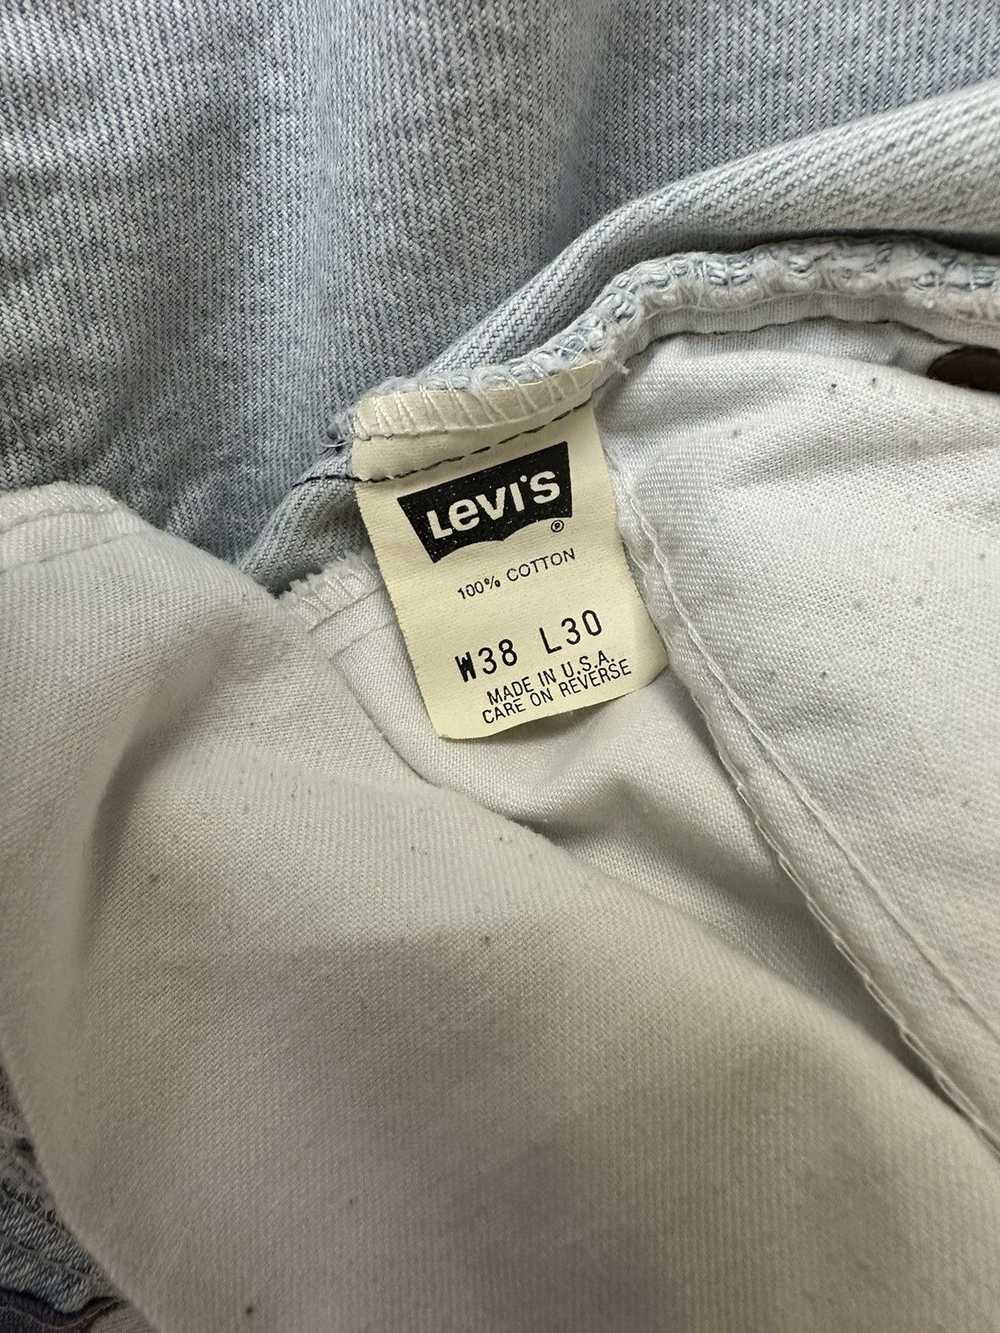 Levi's Orange tab early 90s jeans - image 4